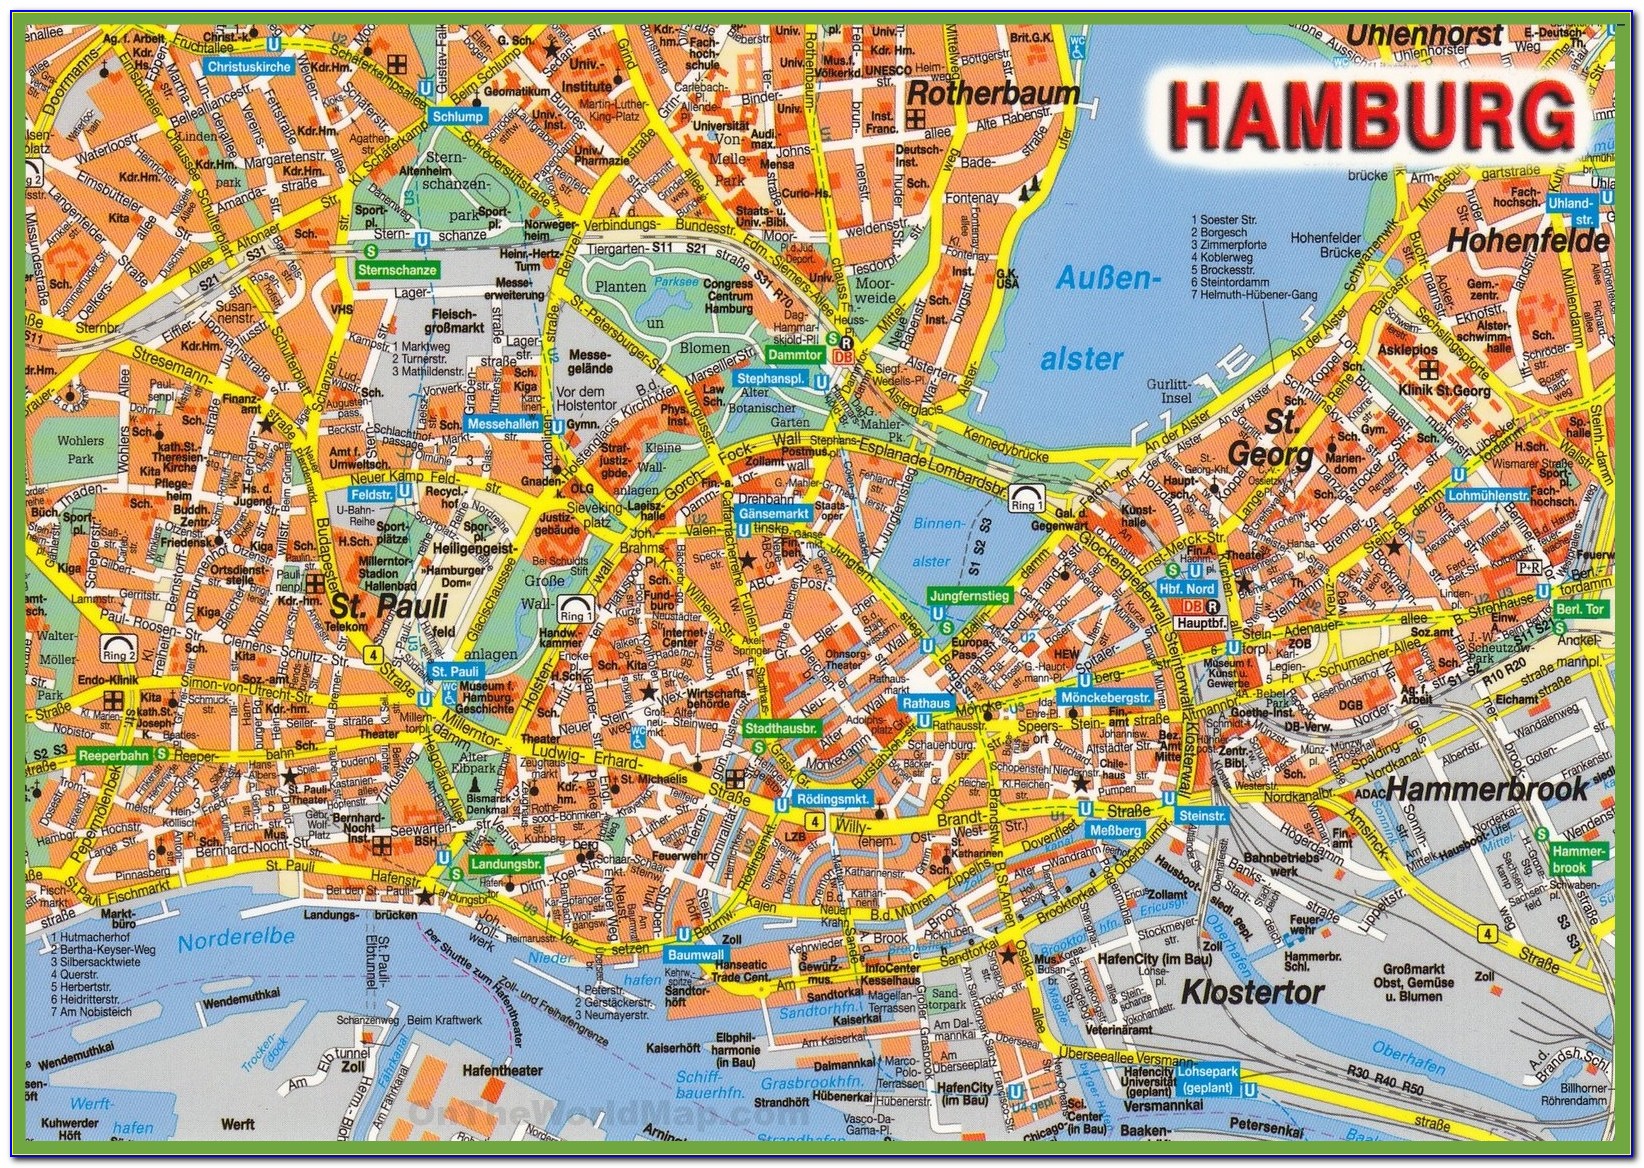 Hamburg City Center Map